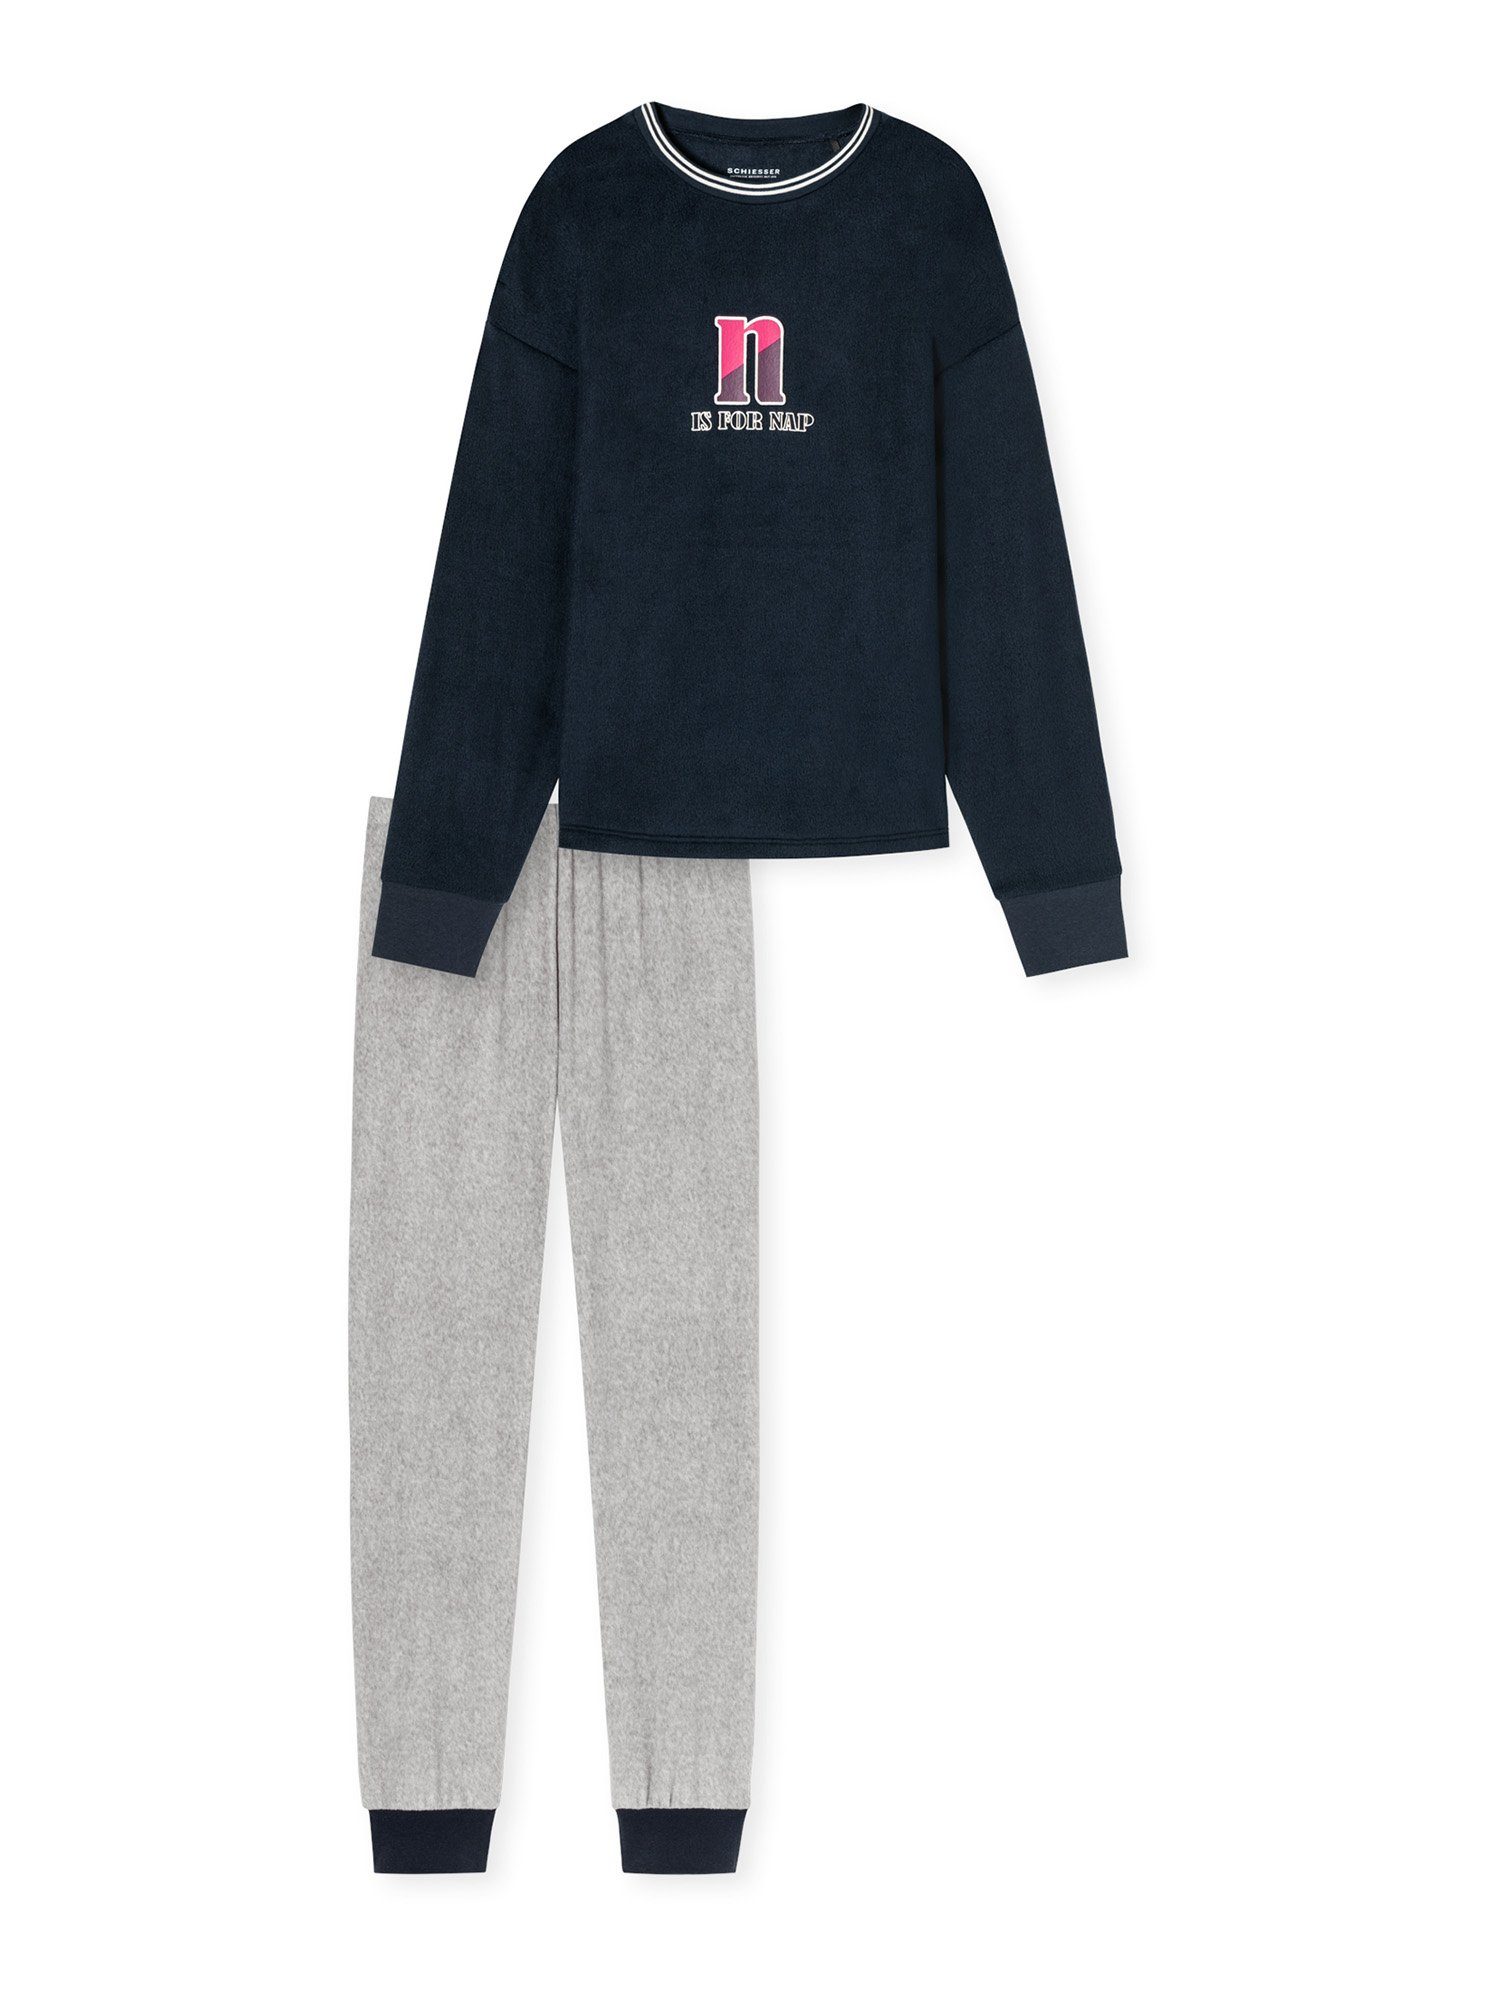 Pyjama Teens Nightwear schlafmode Schiesser pyjama schlafanzug